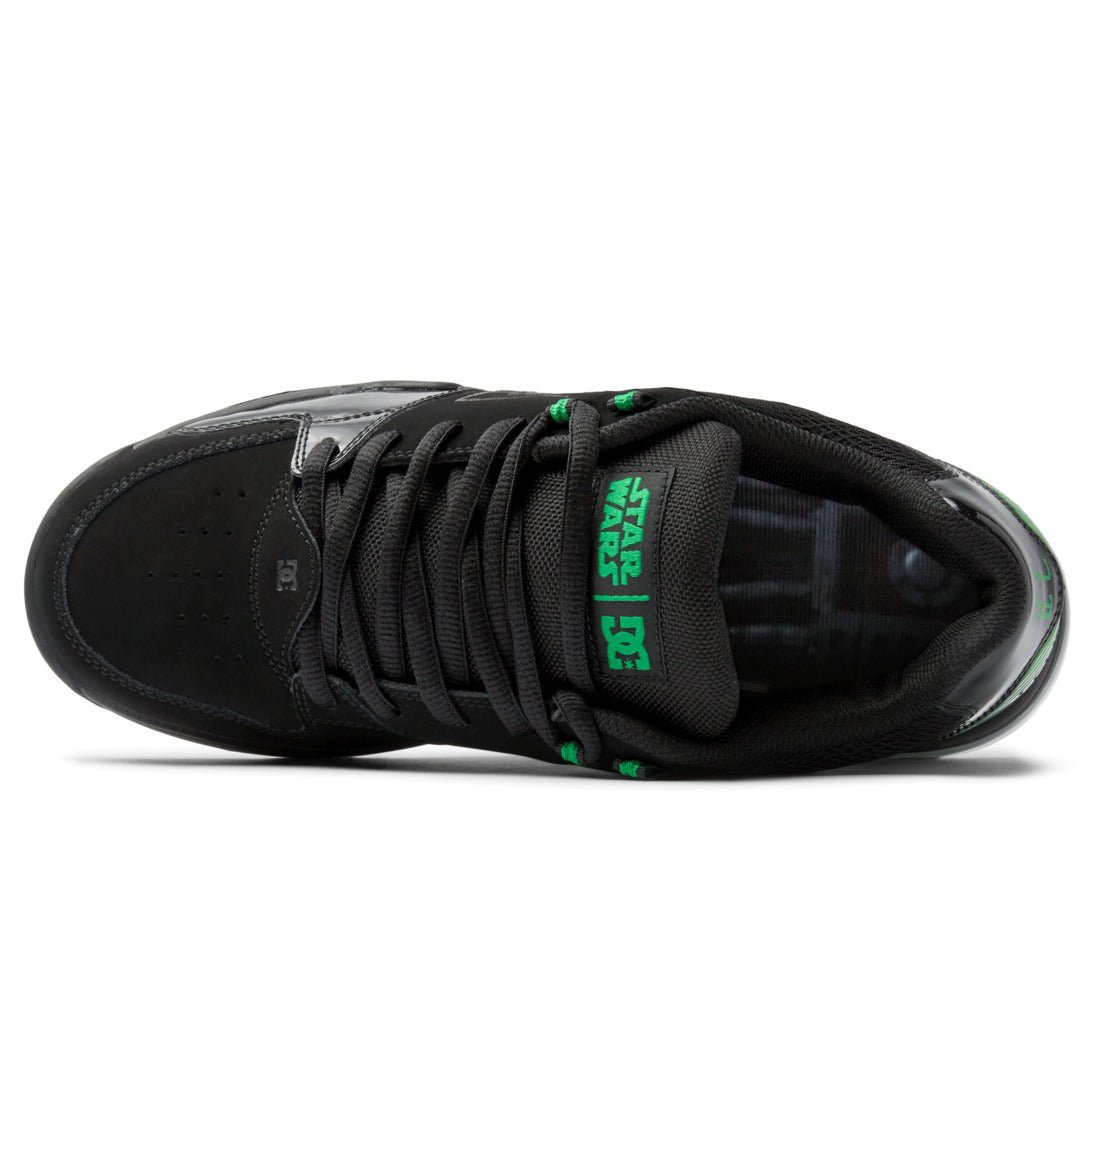 DC Shoes x Star Wars Versatile Shoe - Black/Green